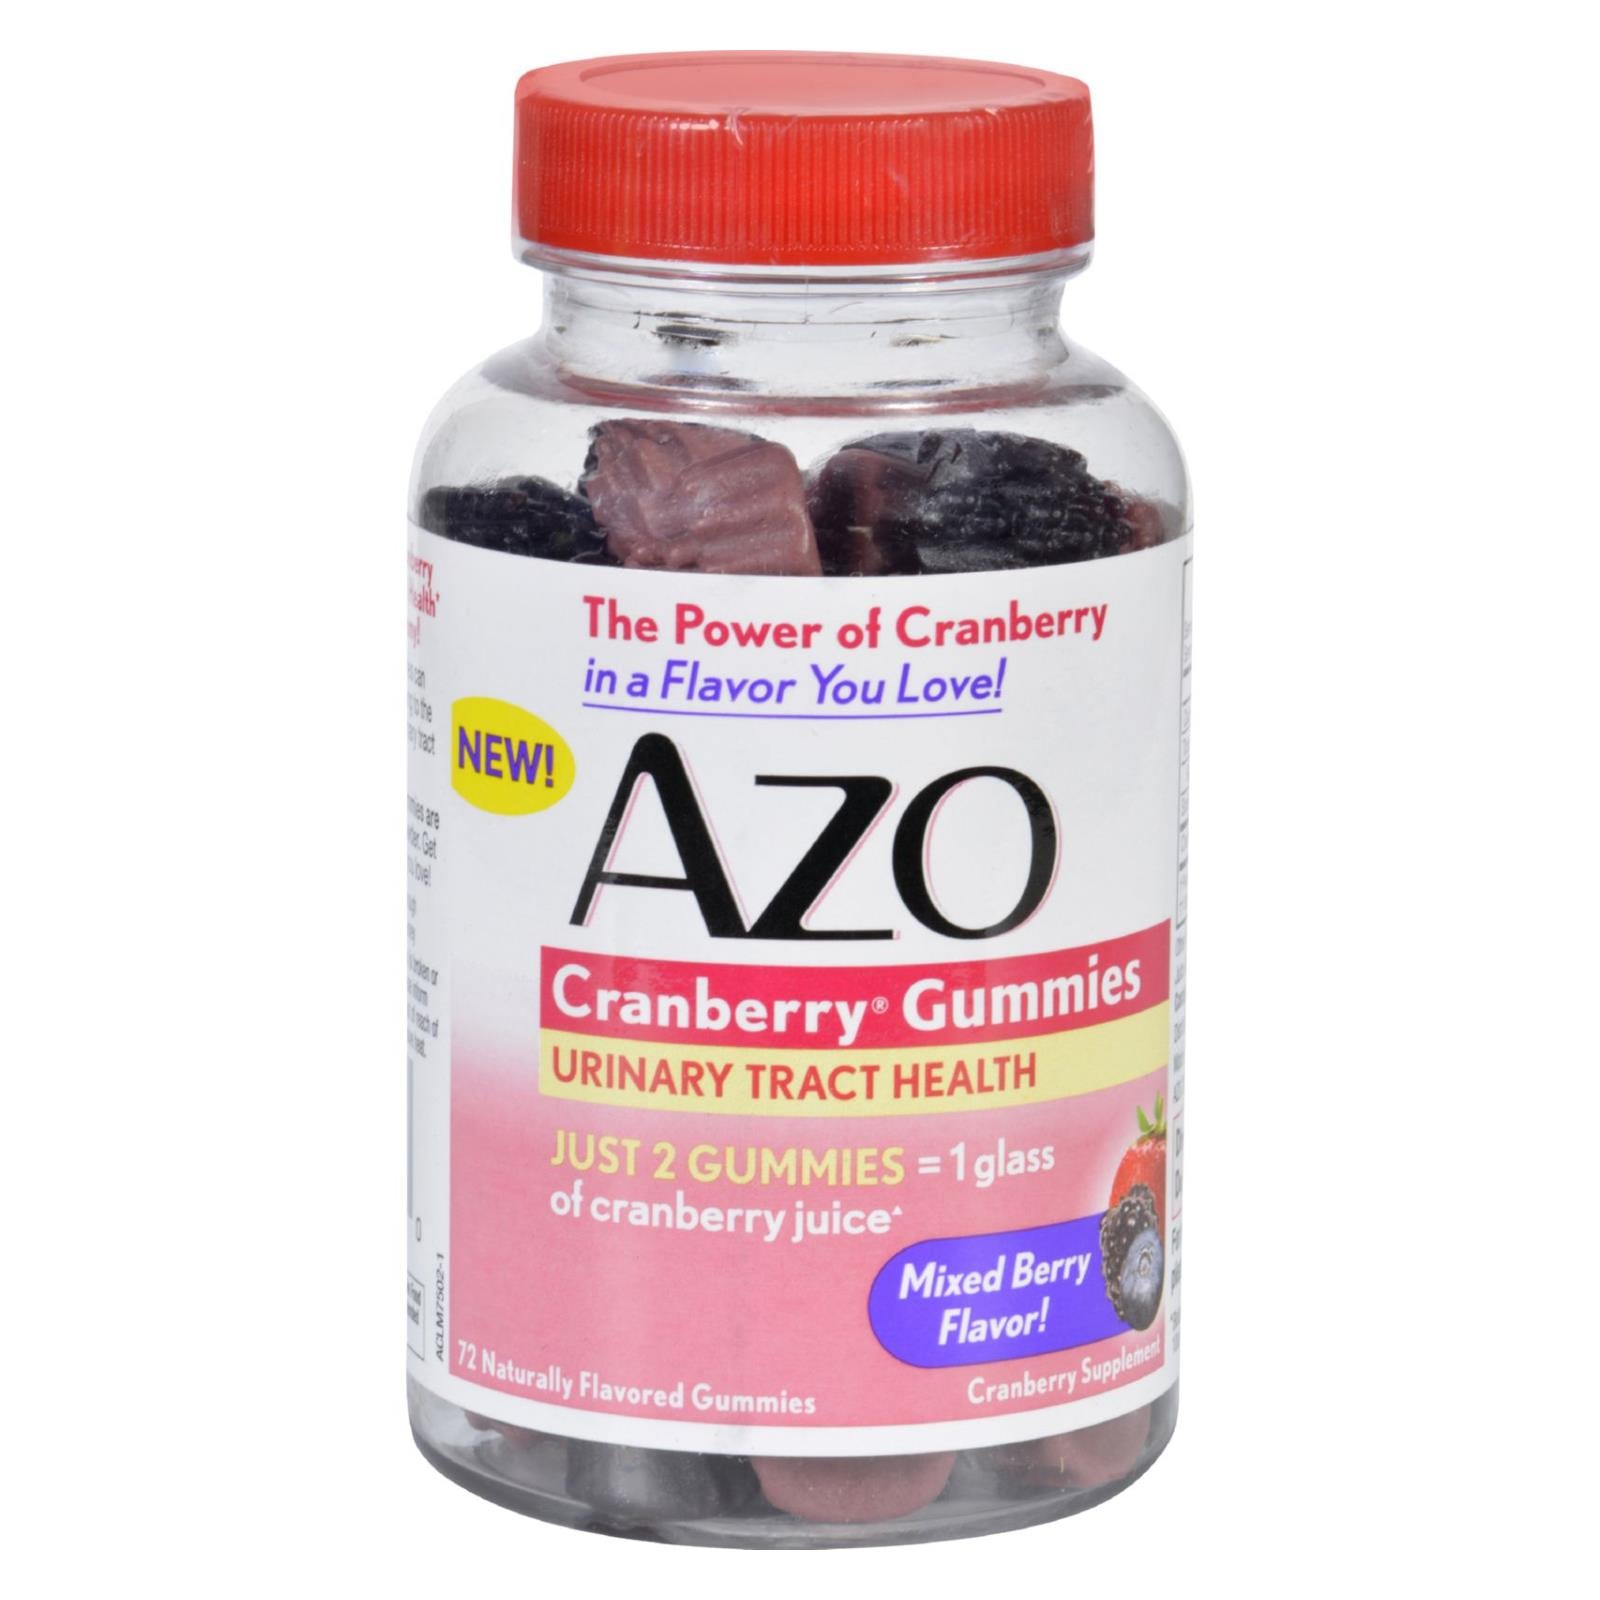 Azo, Azo Cranberry Gummies - 72 Count